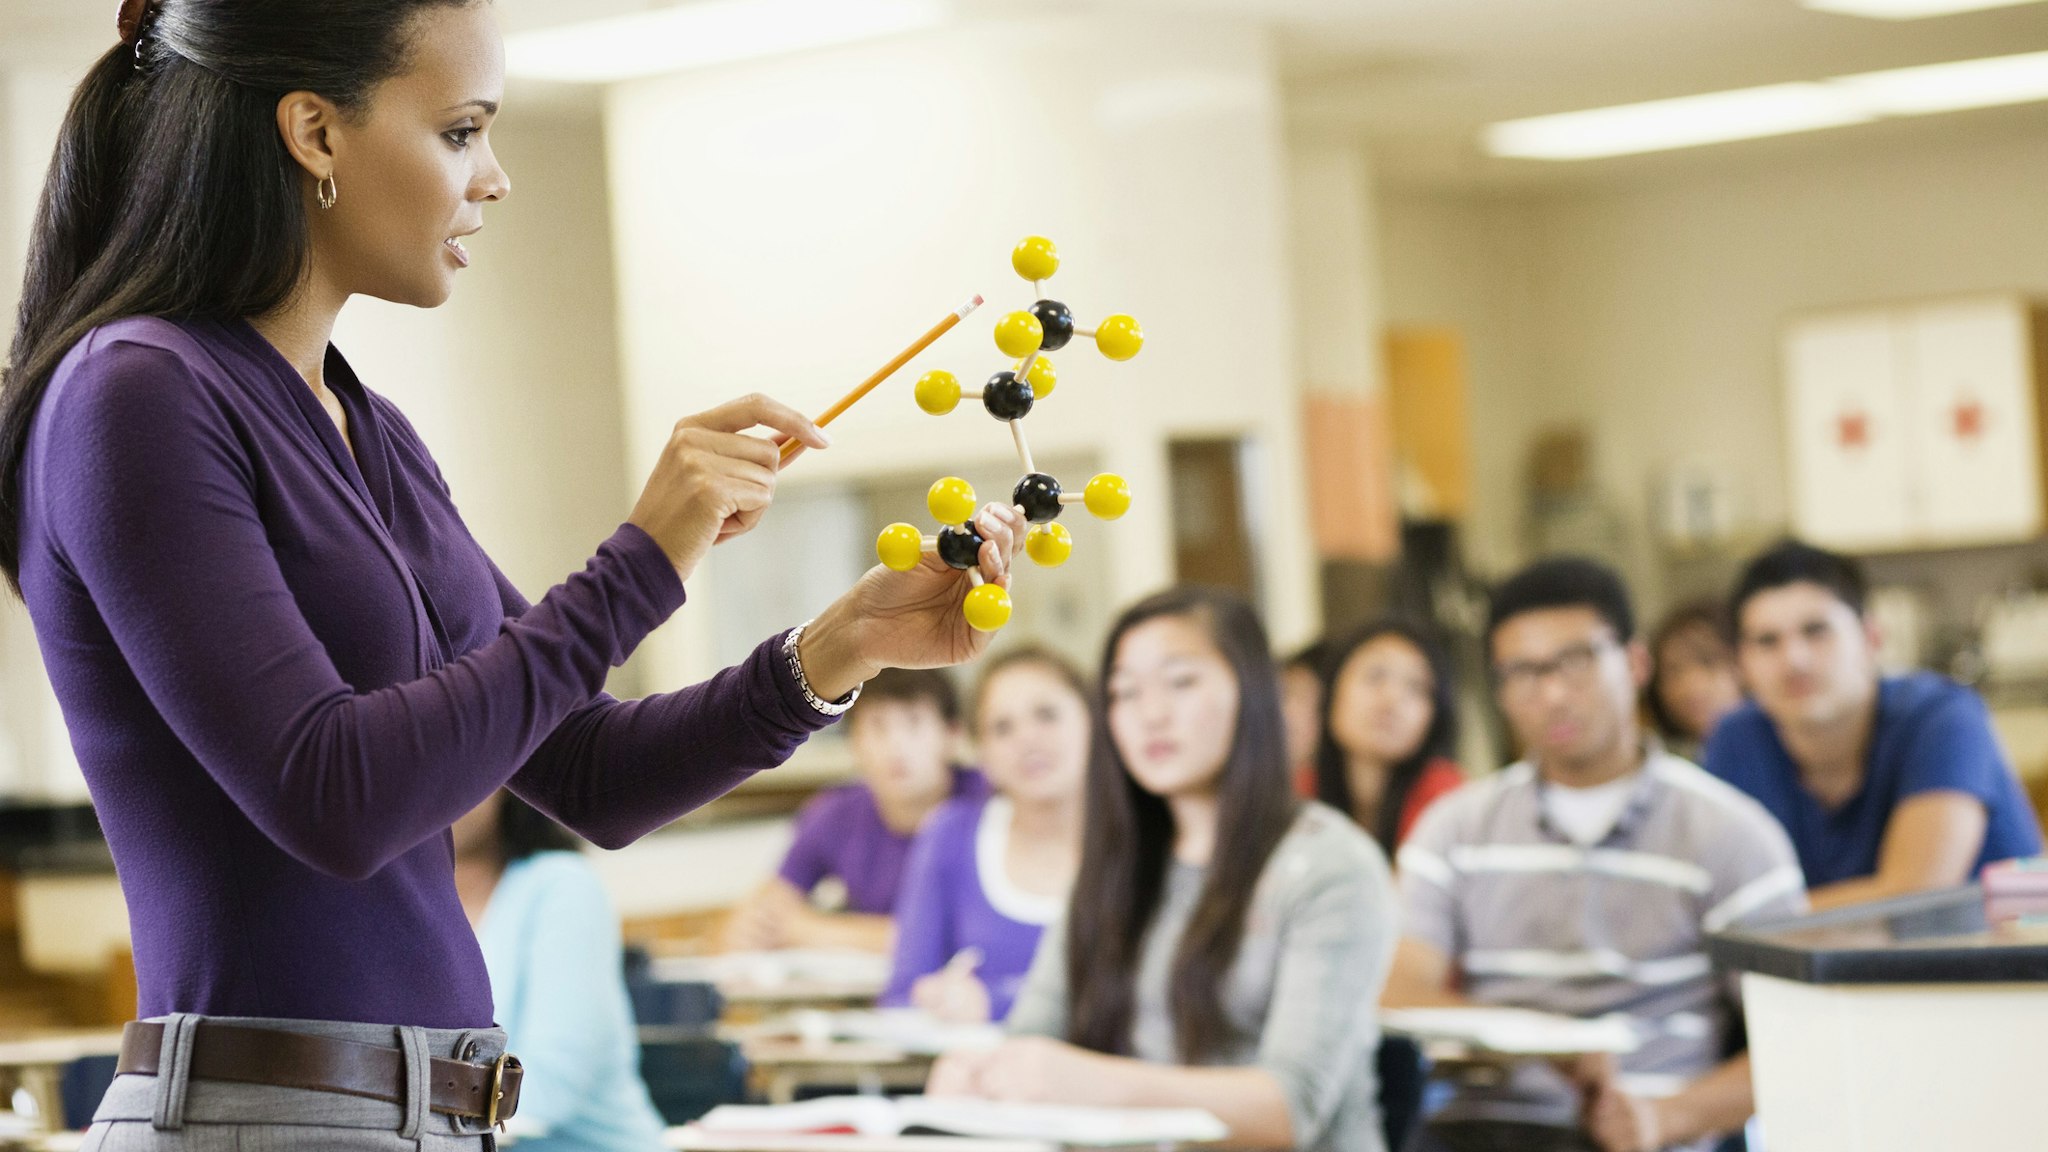 Teacher explaining chemistry model to classroom - stock photo